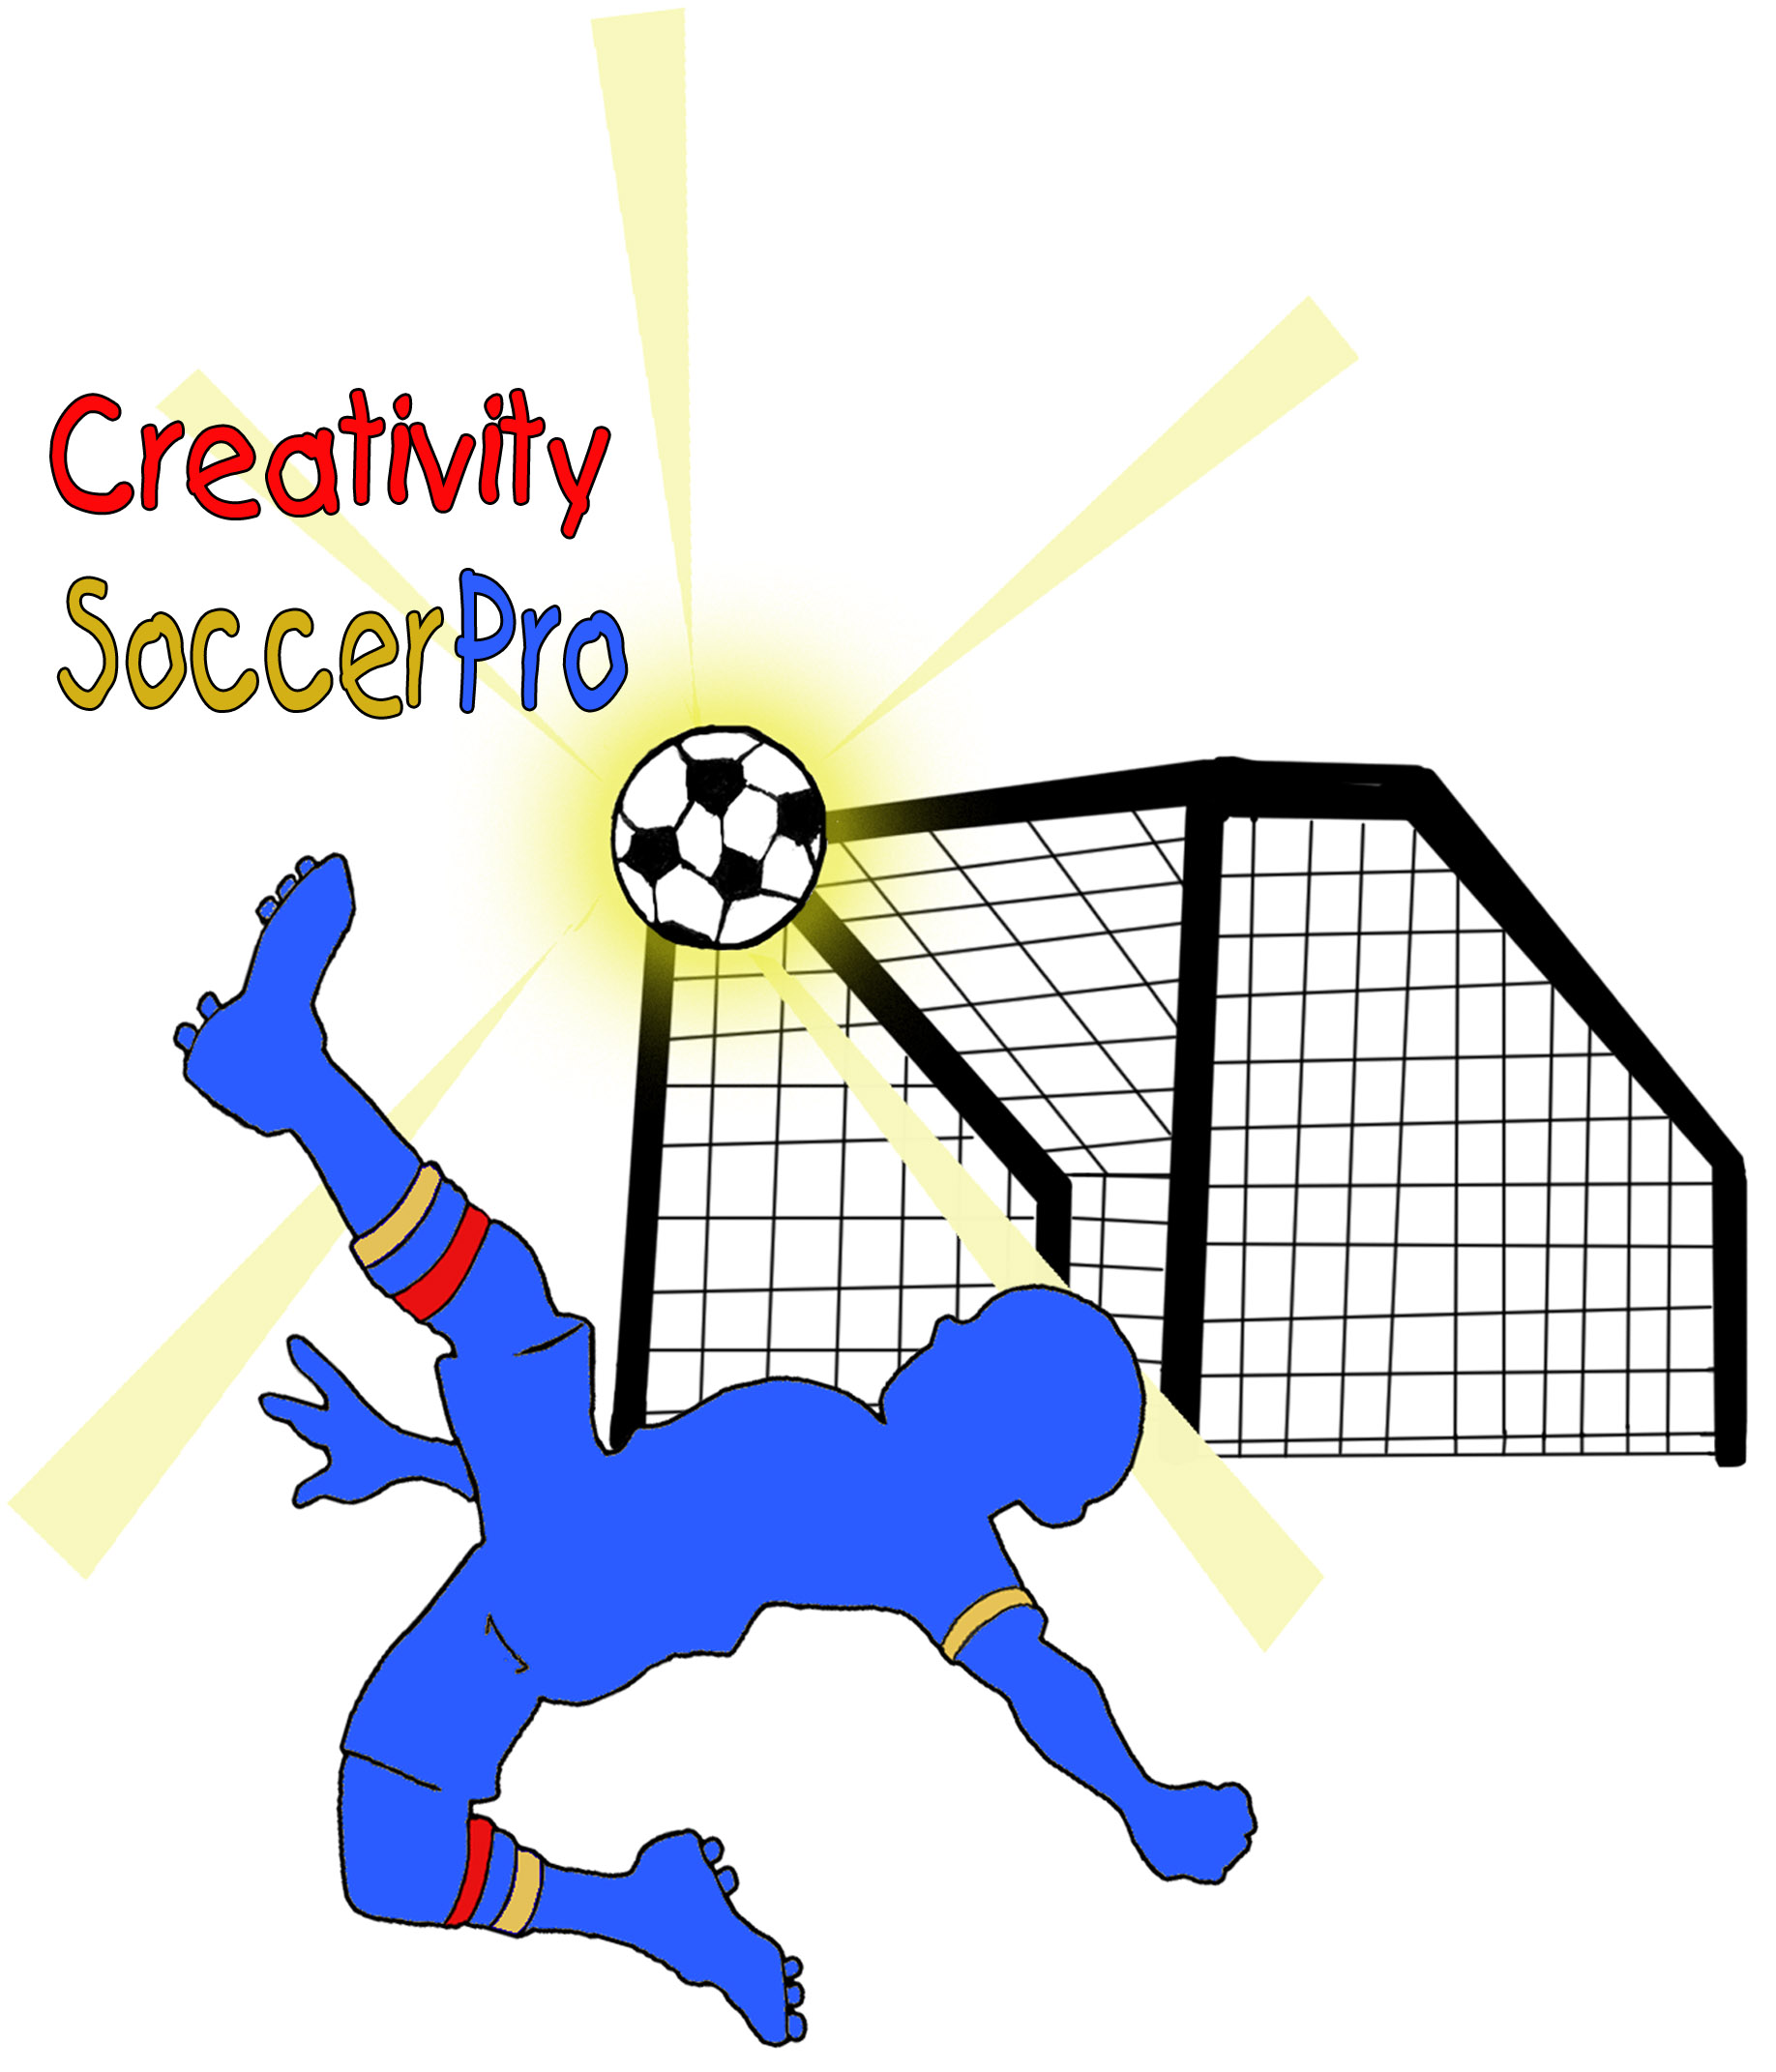 Creativity Soccer Pro